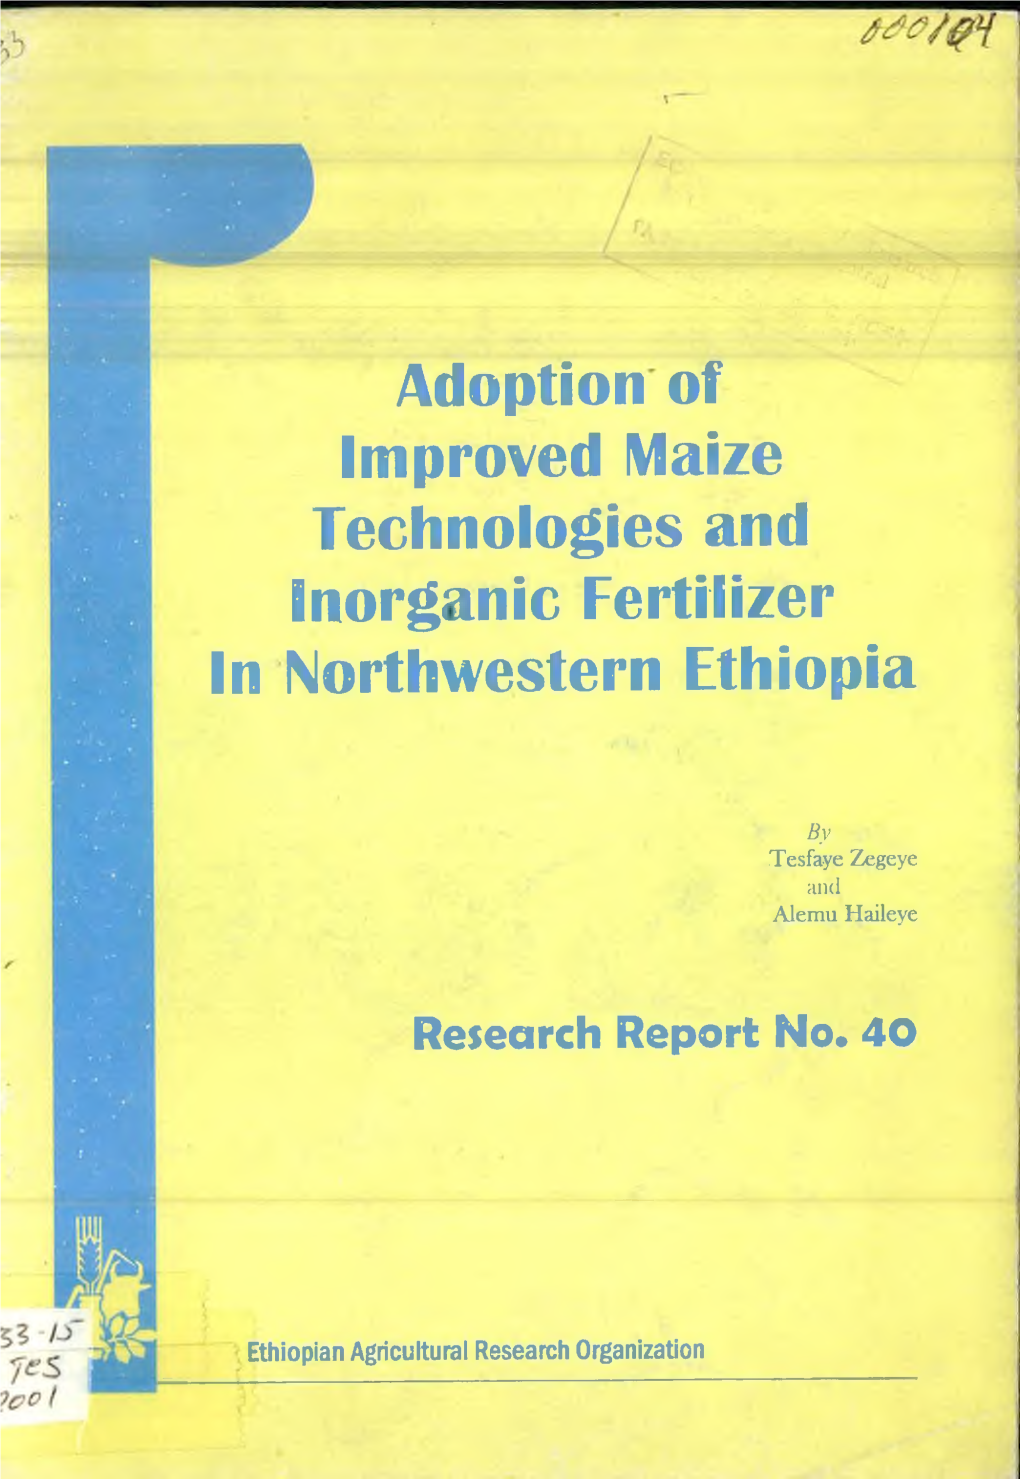 Adoption of Improved Maize Technologies and Inorganic Fertilizer in Northwestern Ethiopia